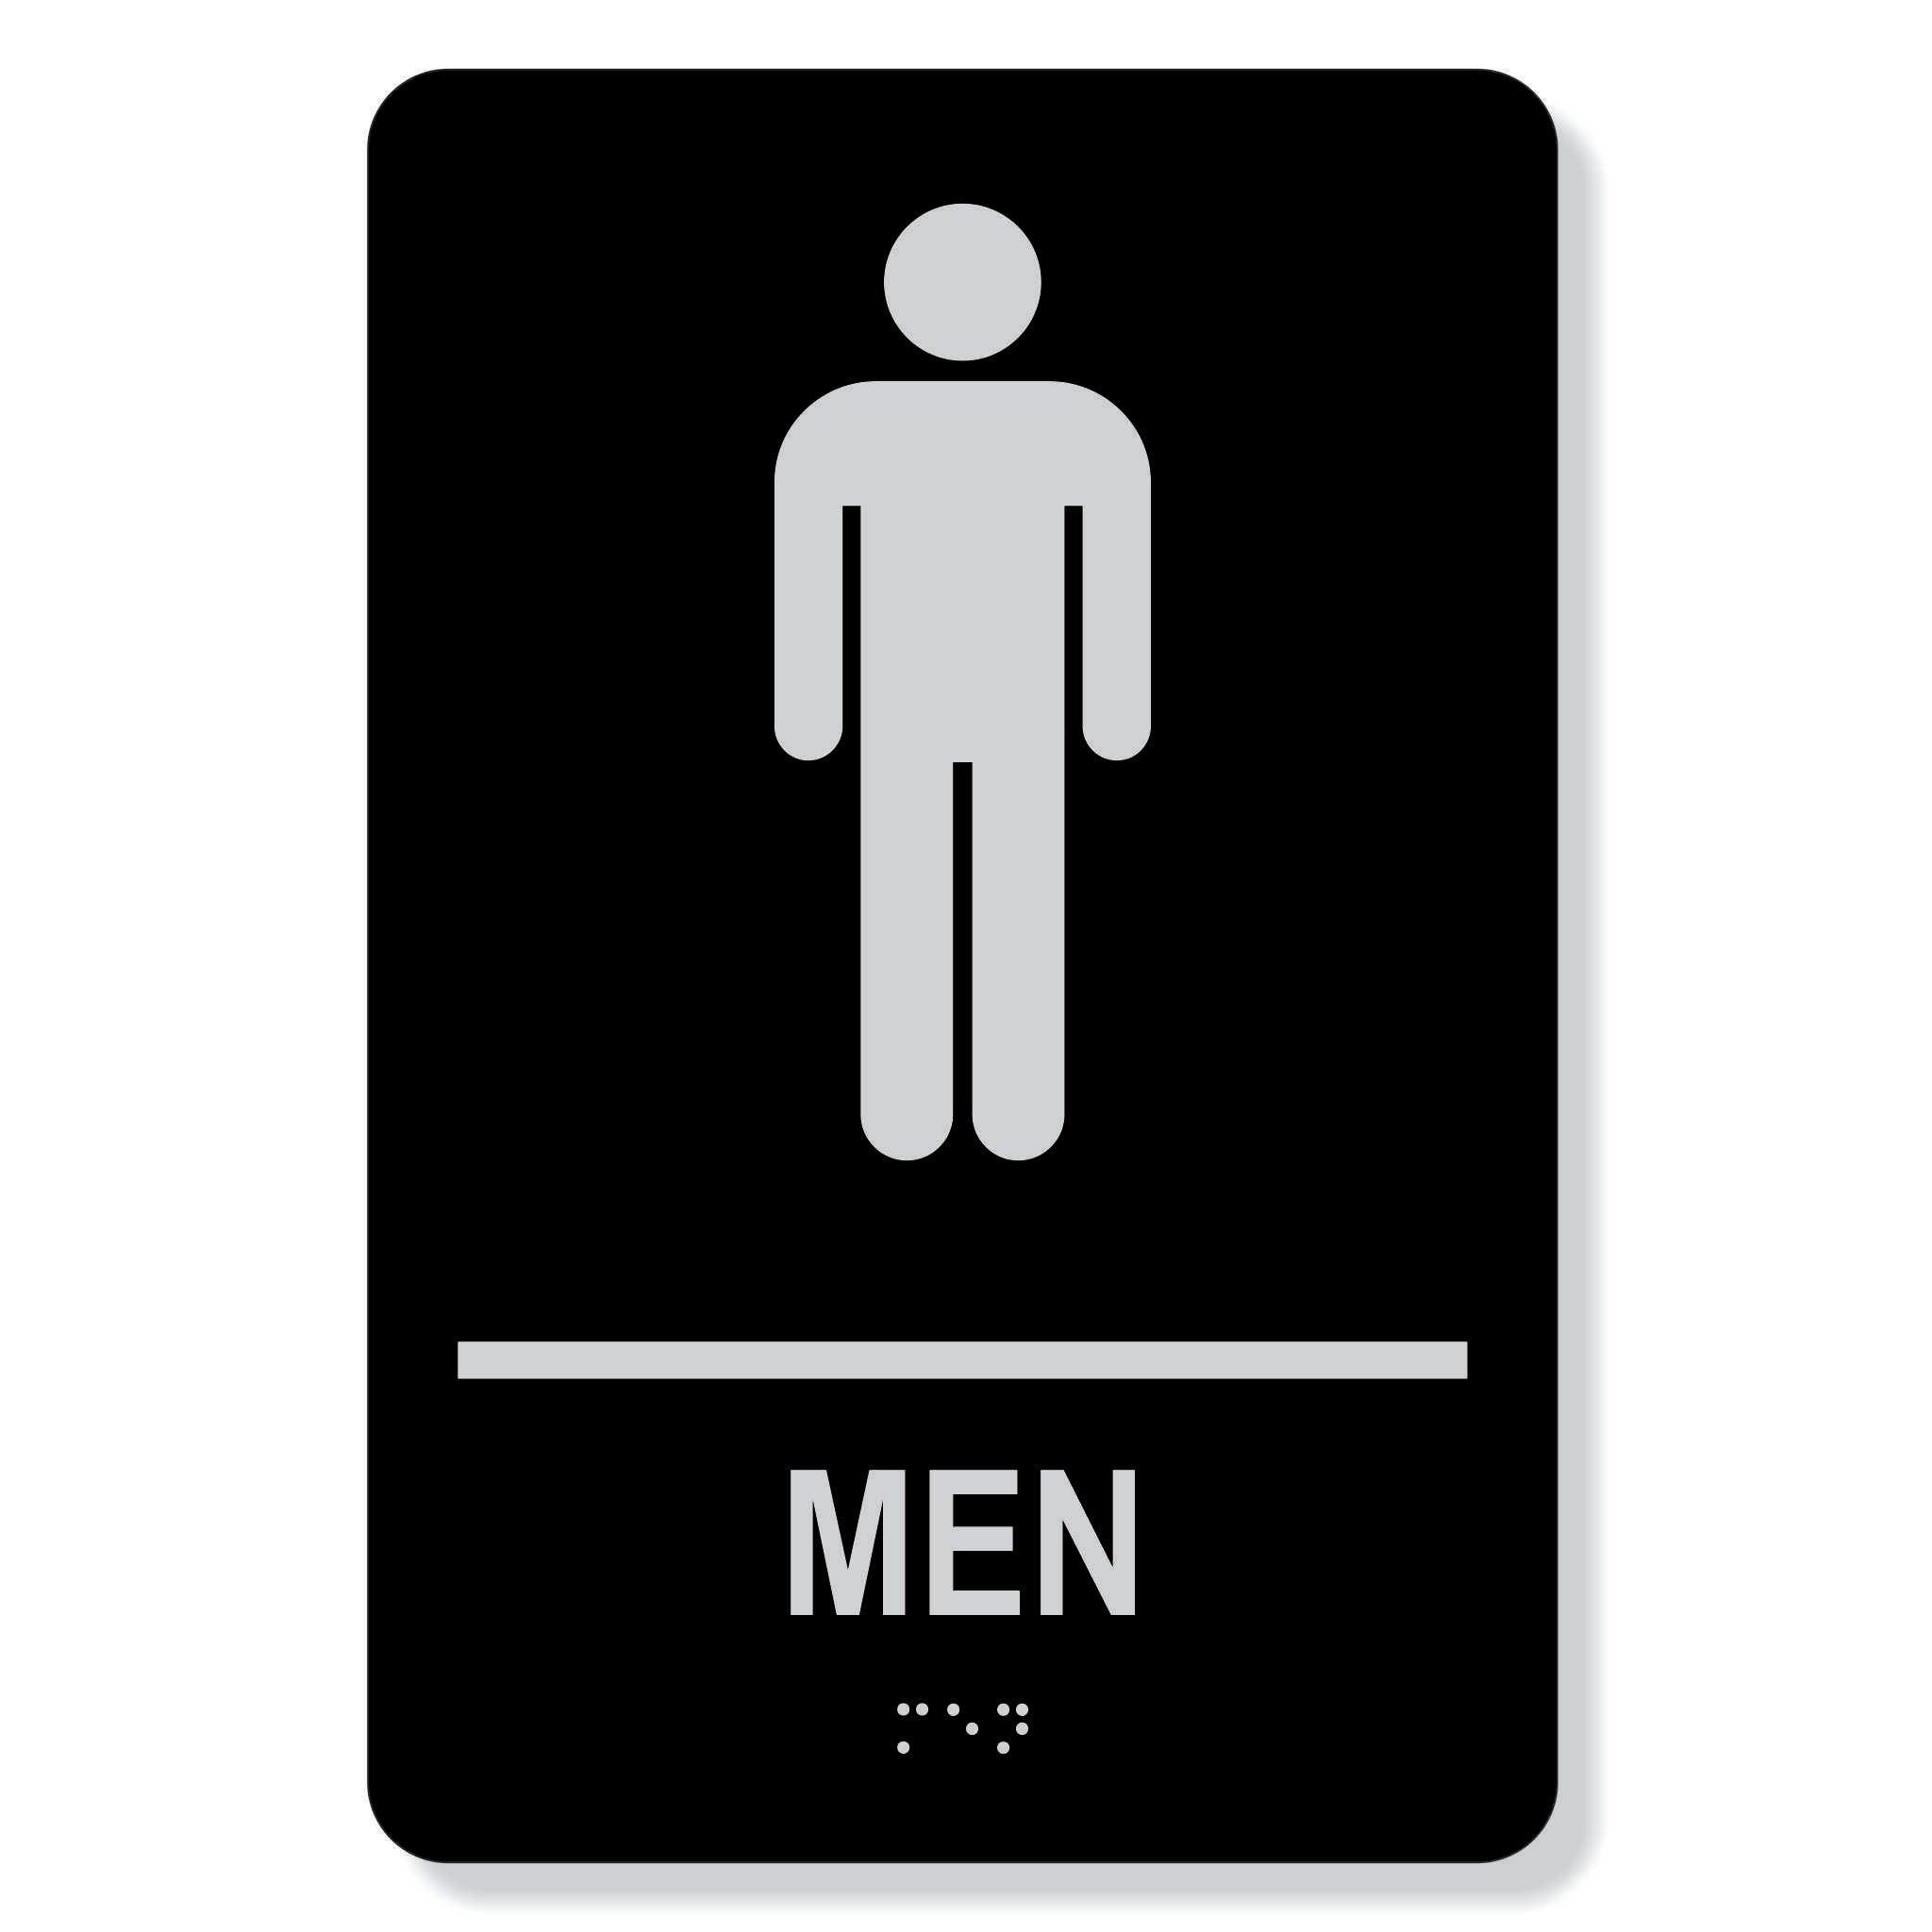 TJX- MEN washroom sign - non accessible facility